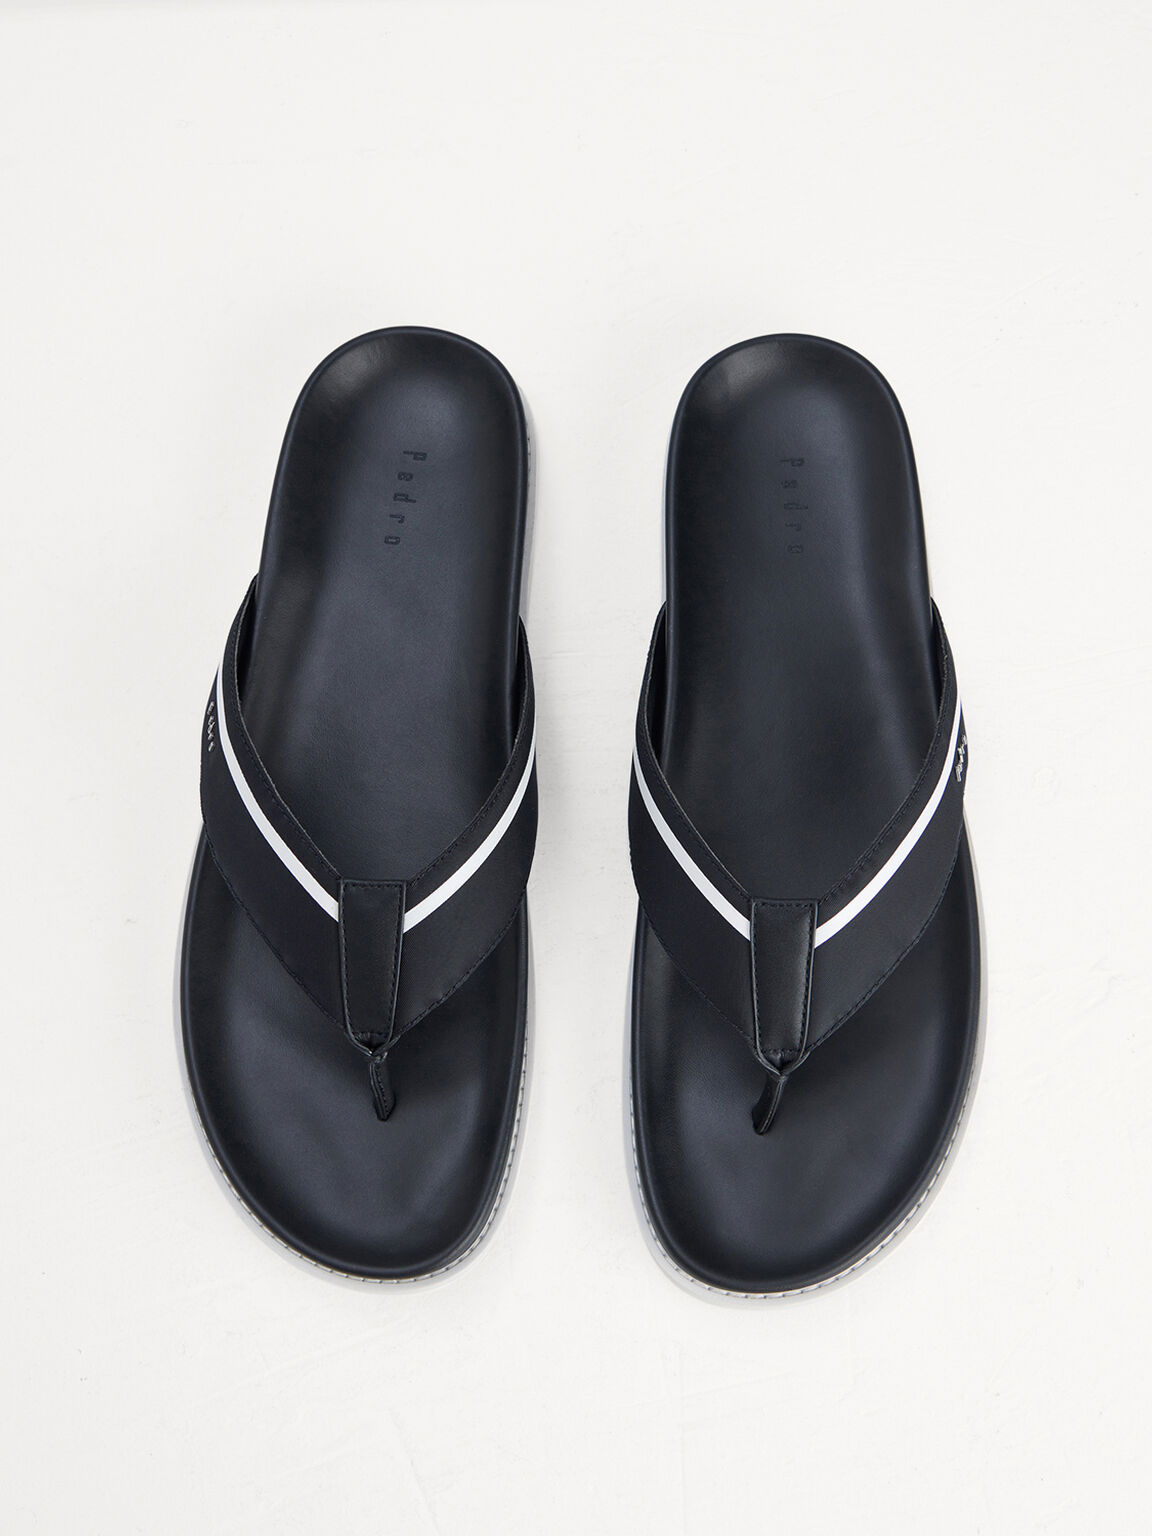 Nylon Thong Sandals, Black